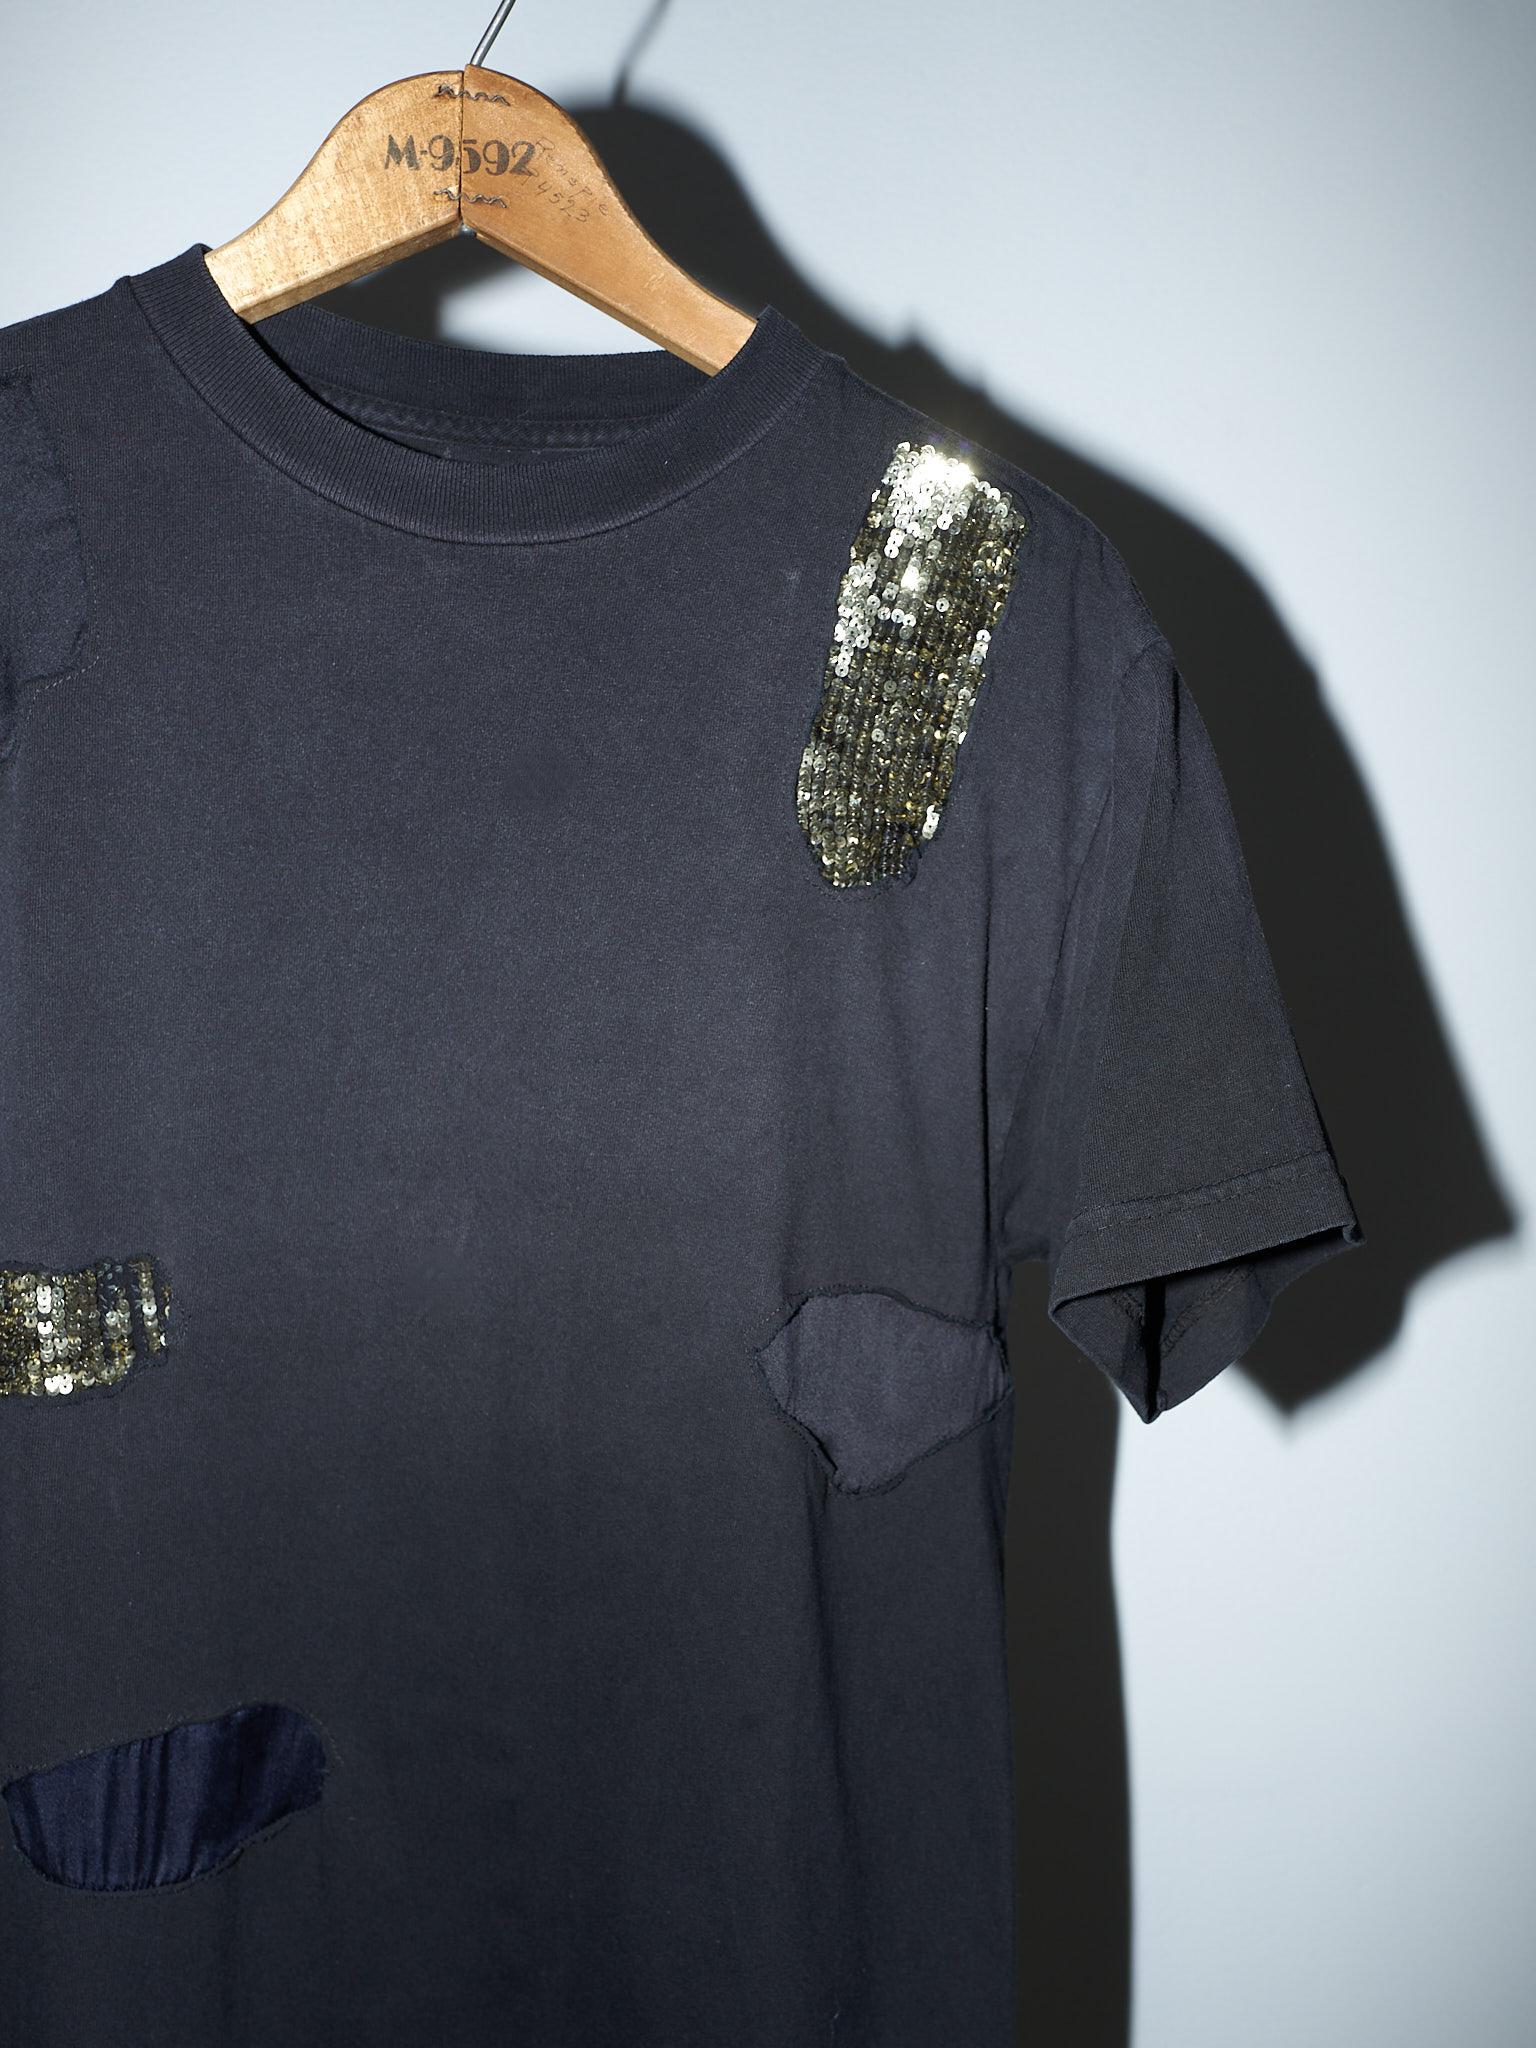 J Dauphin Black T-Shirt Embellished  Patch Work Sequin Silk Body Cotton  7